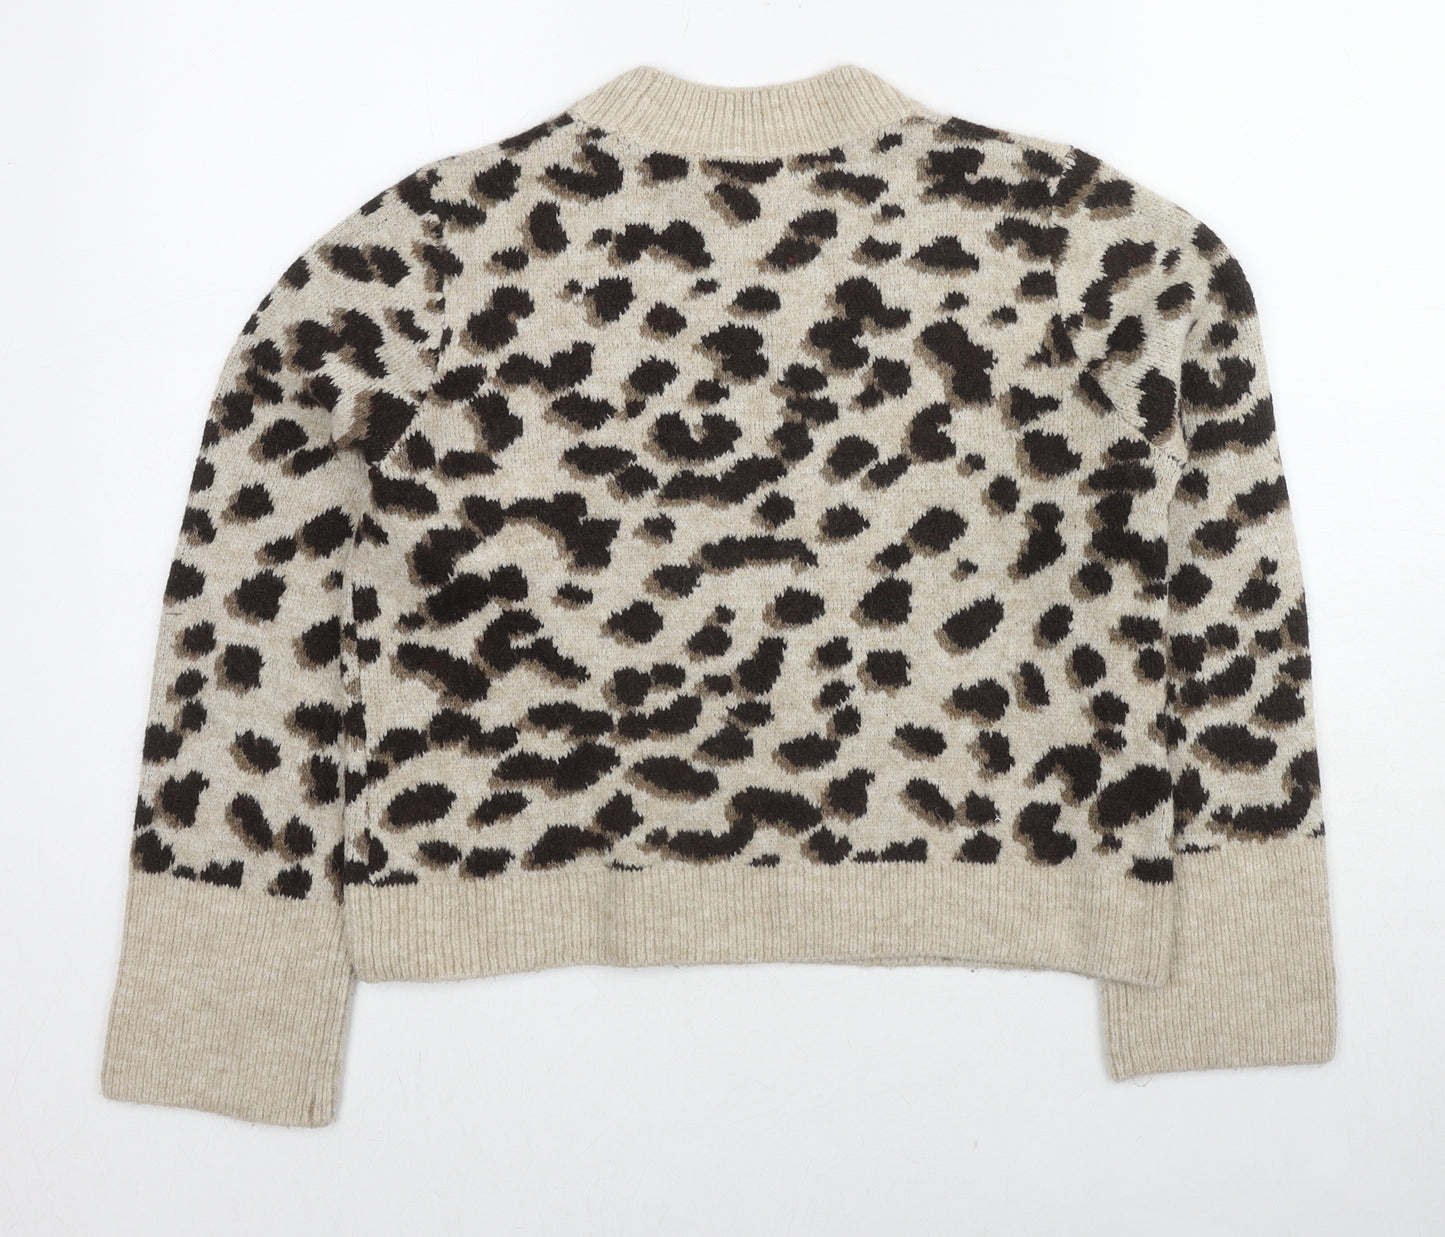 H&M Womens Beige Round Neck Animal Print Acetate Pullover Jumper Size XS - Leopard Print